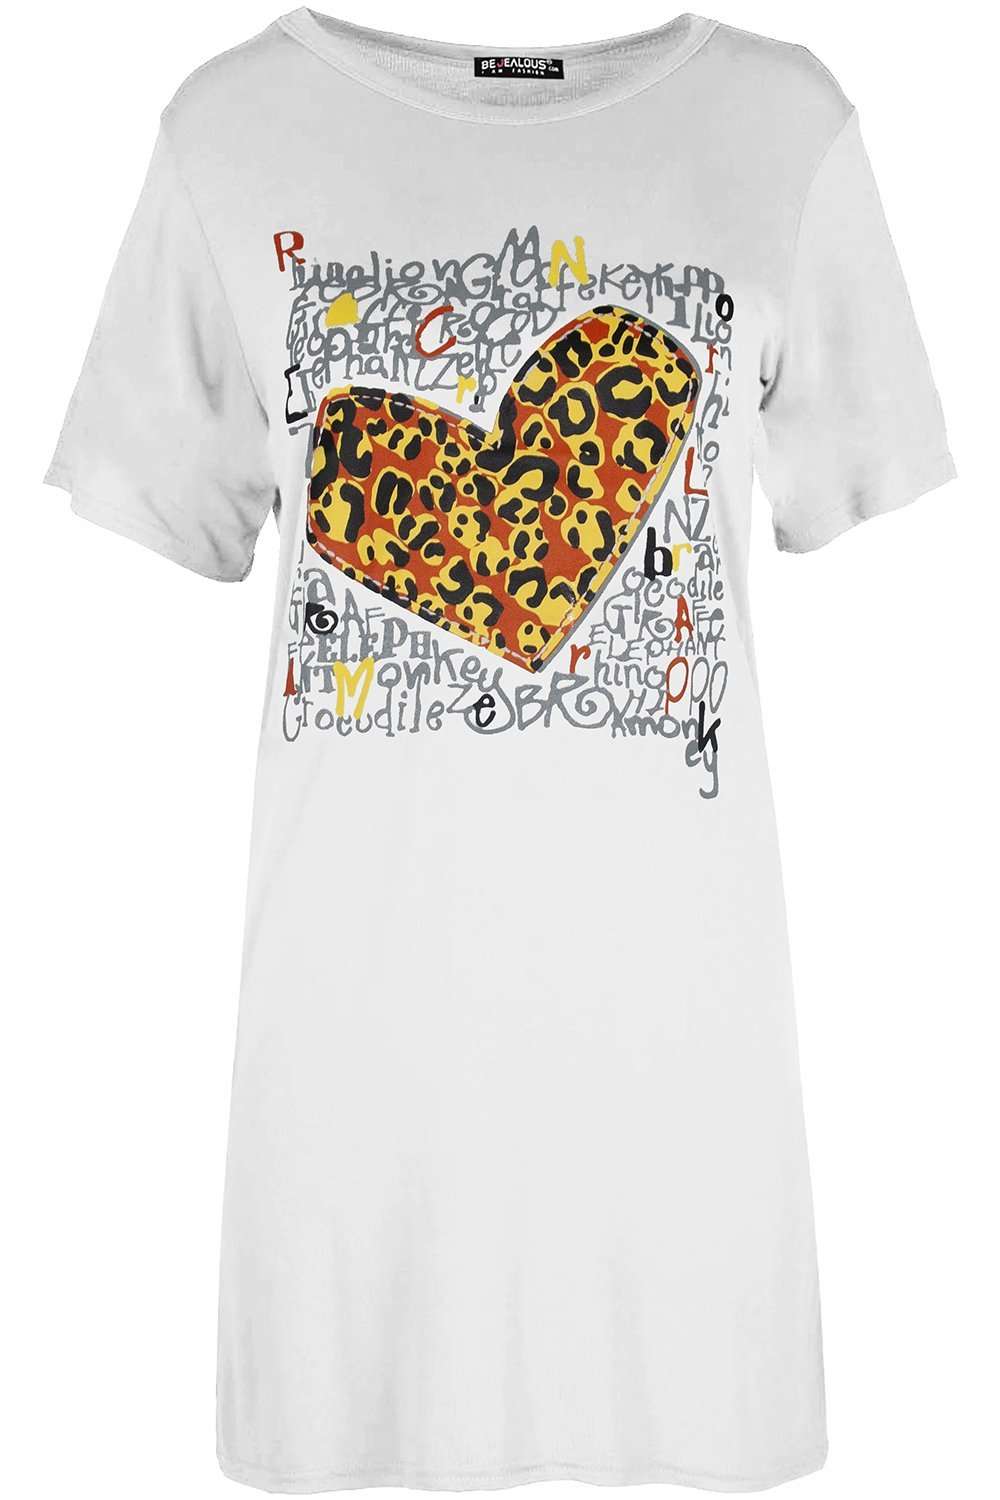 Lorna Leopard Print Graphic Tshirt Dress - bejealous-com